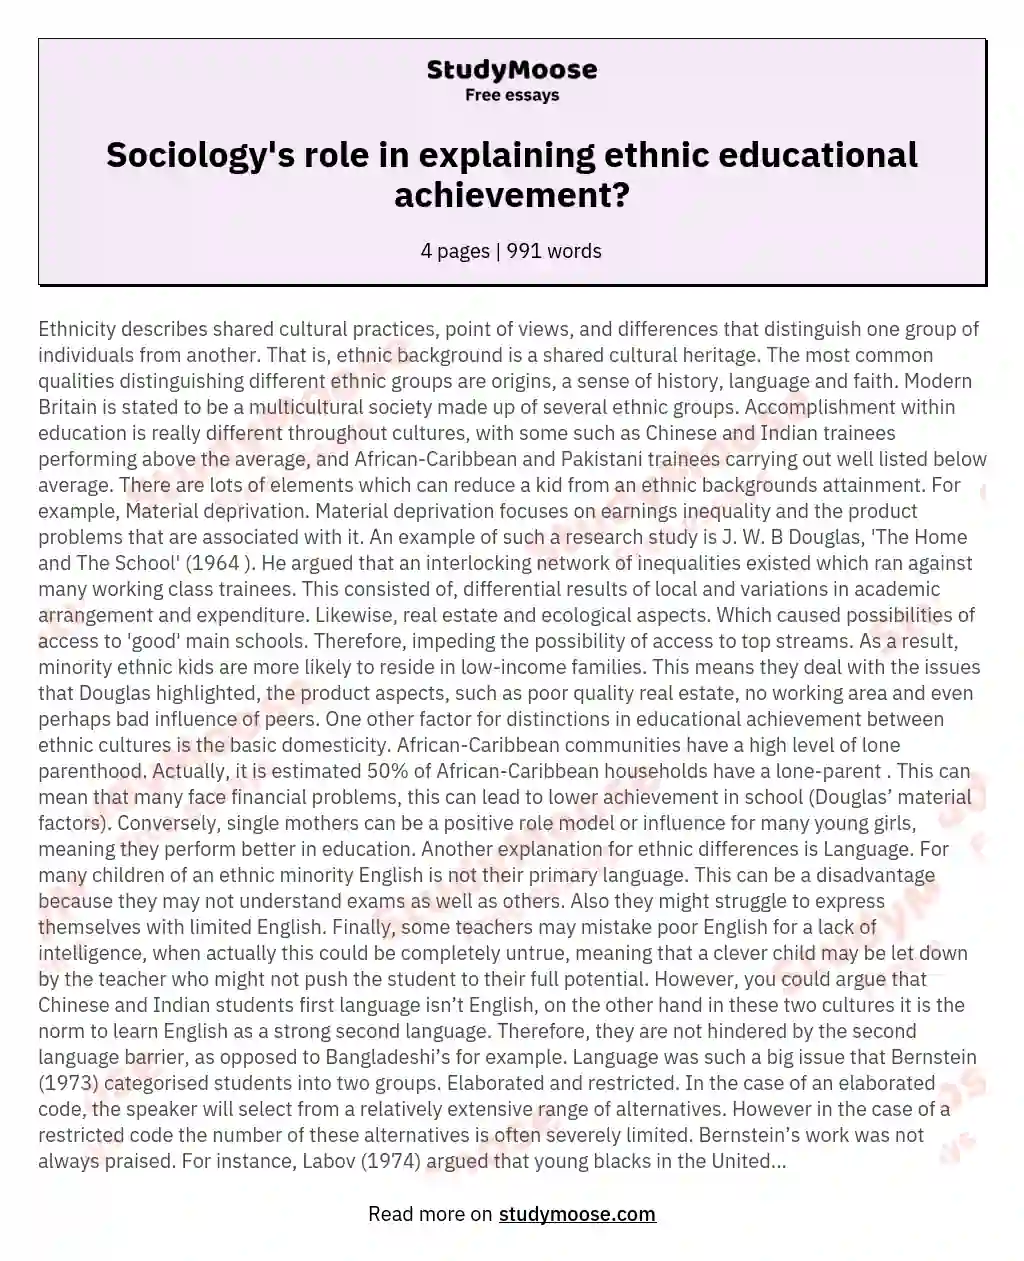 Sociology's role in explaining ethnic educational achievement? essay